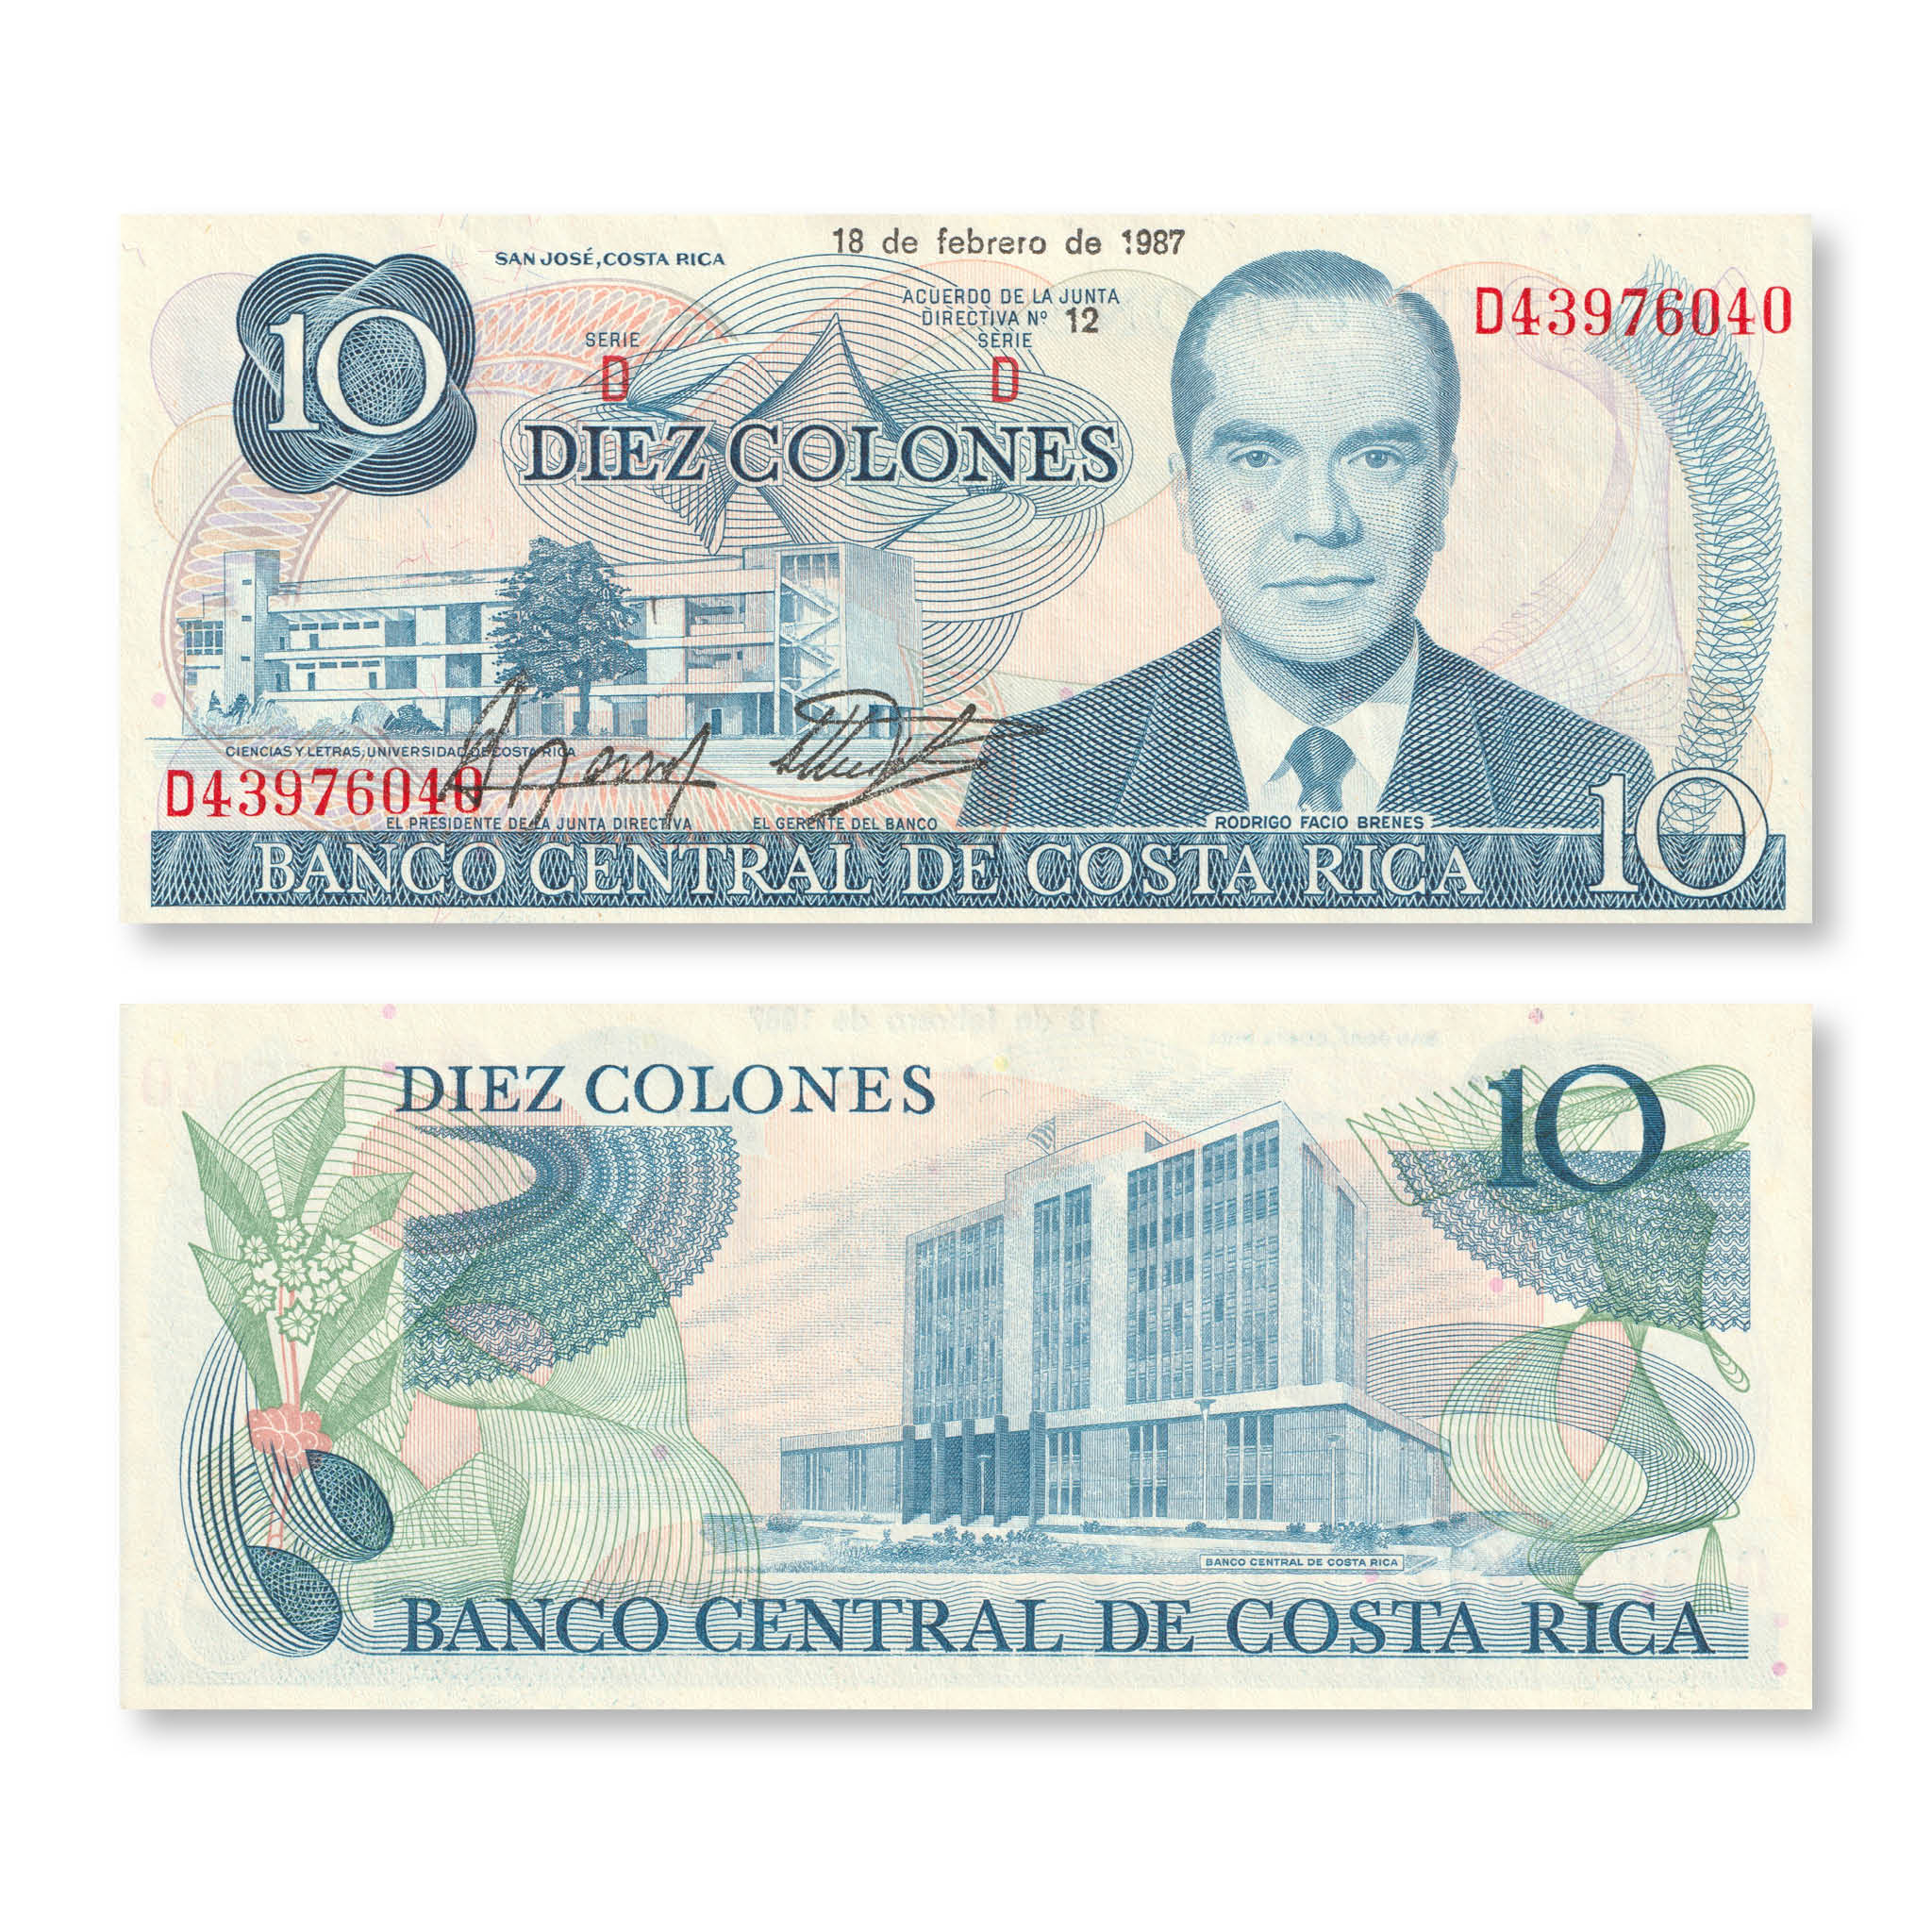 Costa Rica 10 Colones, 1987, B523x, P237b, UNC - Robert's World Money - World Banknotes